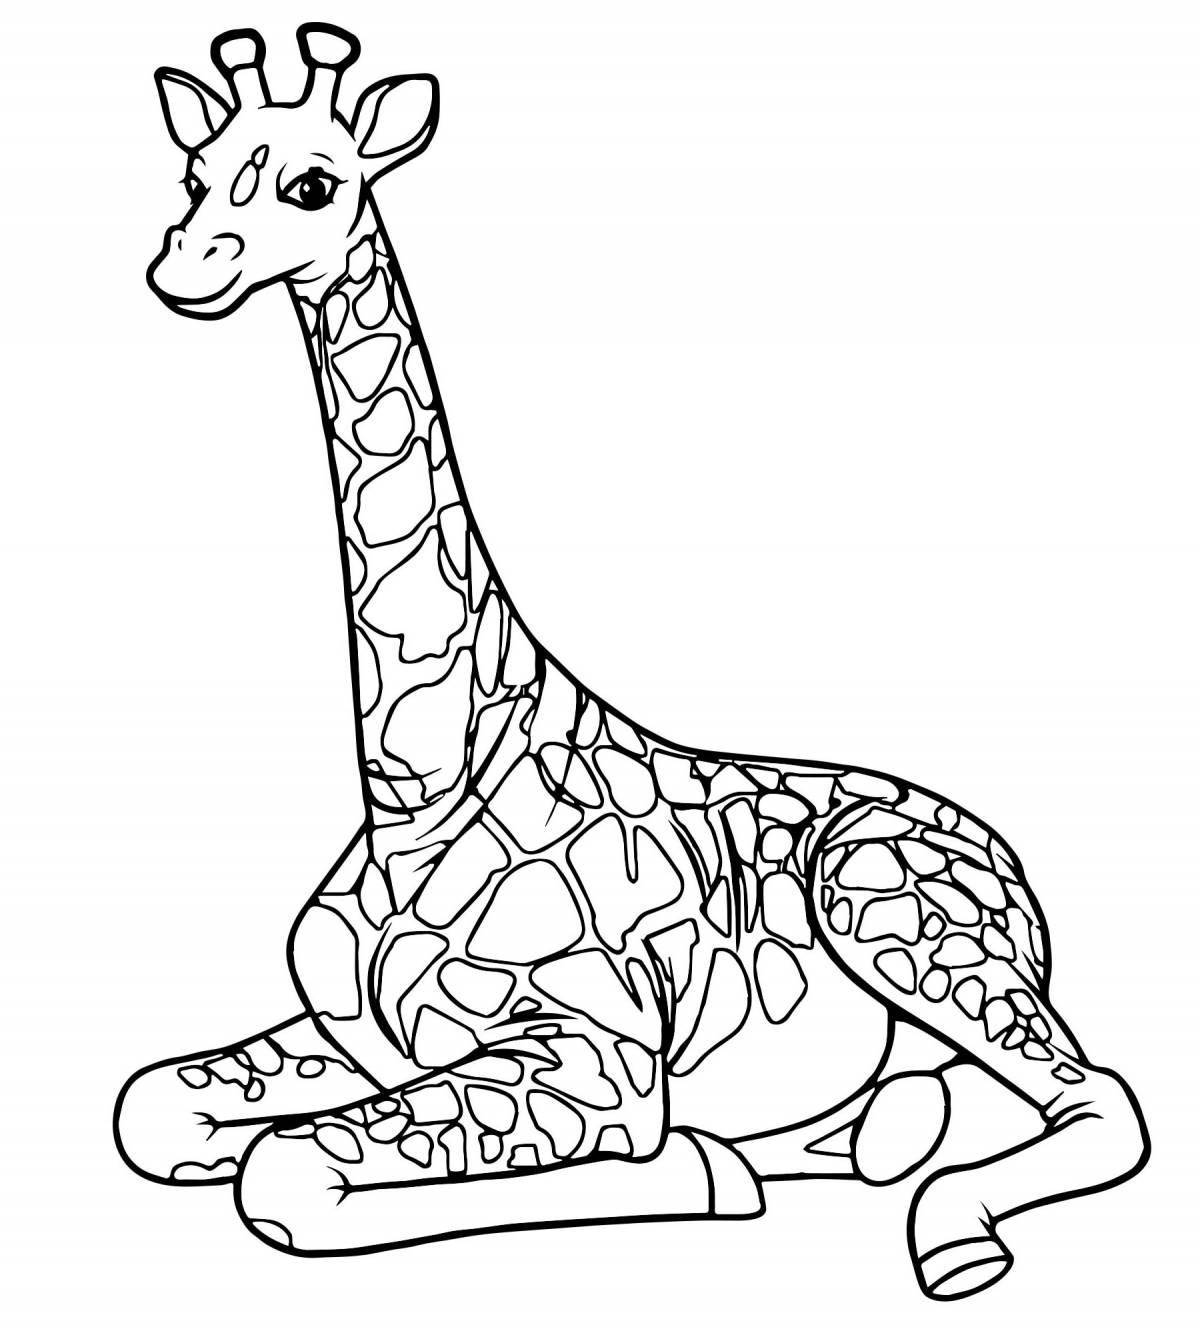 Funny giraffe coloring book